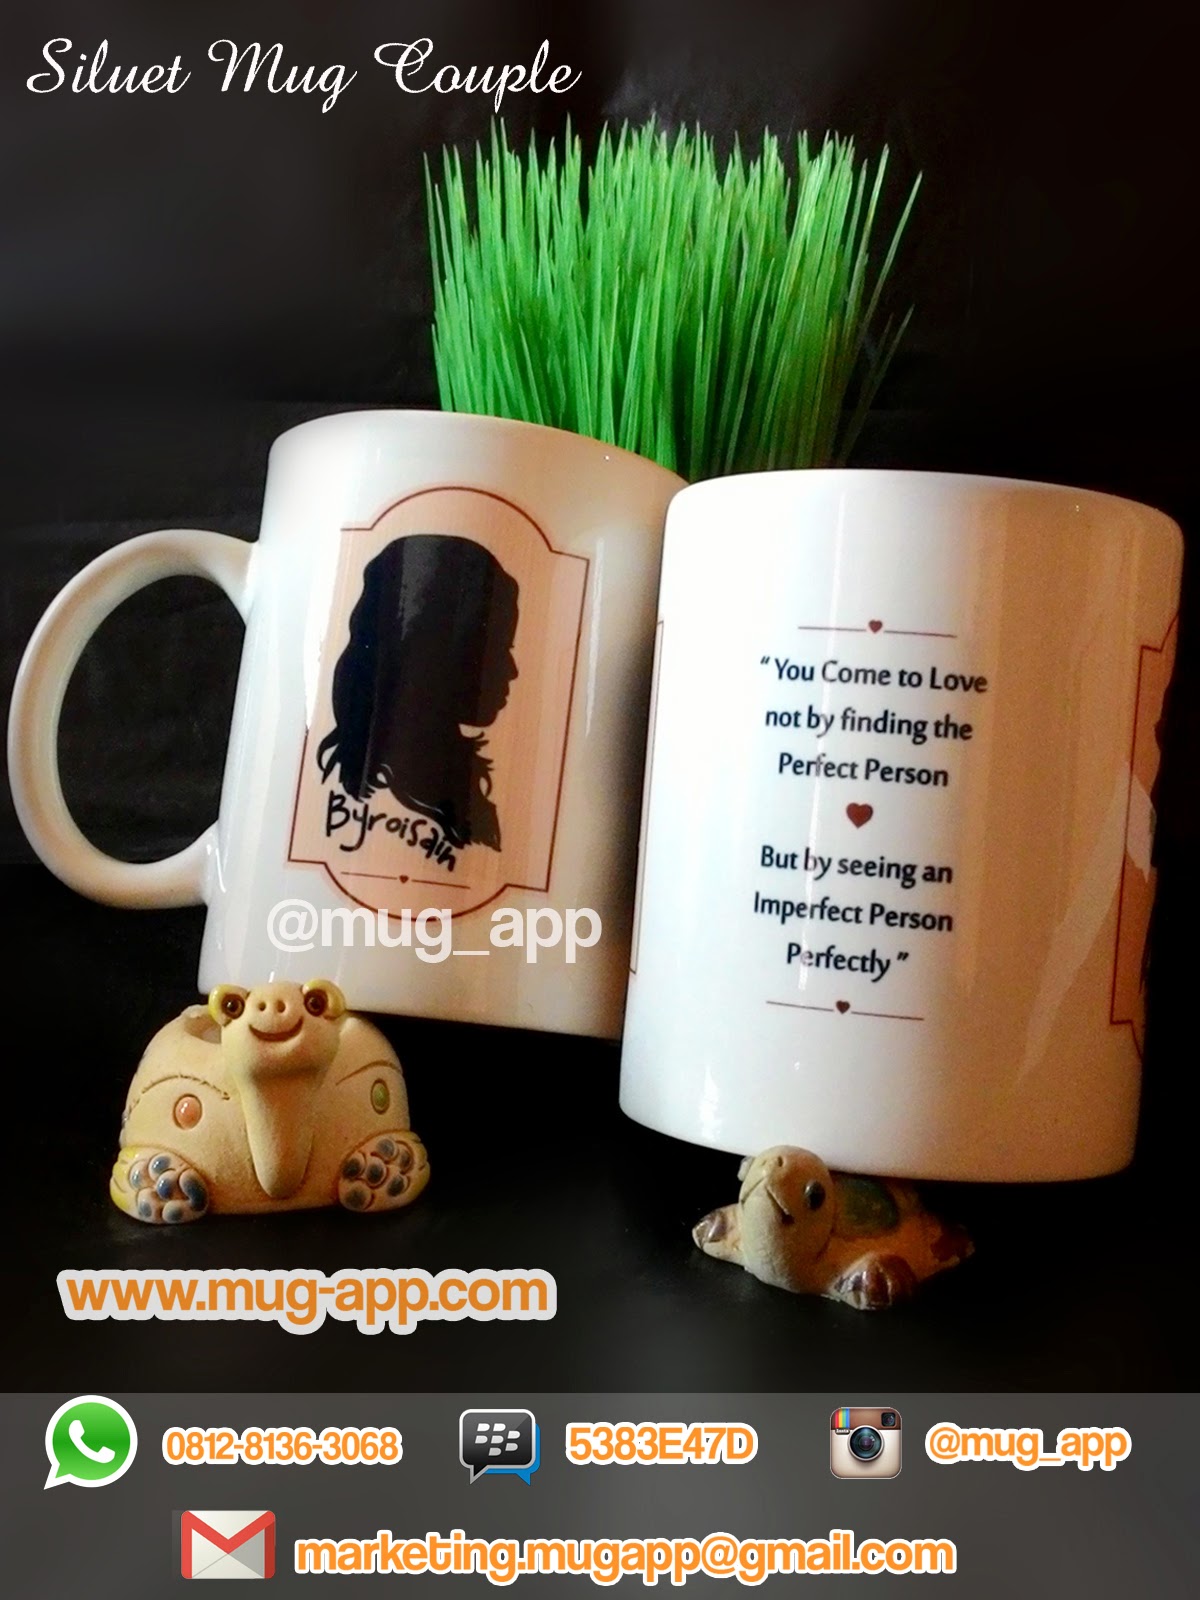  Mug  Desain  Siluet Wedding Mug  dan Souvenir Promosi